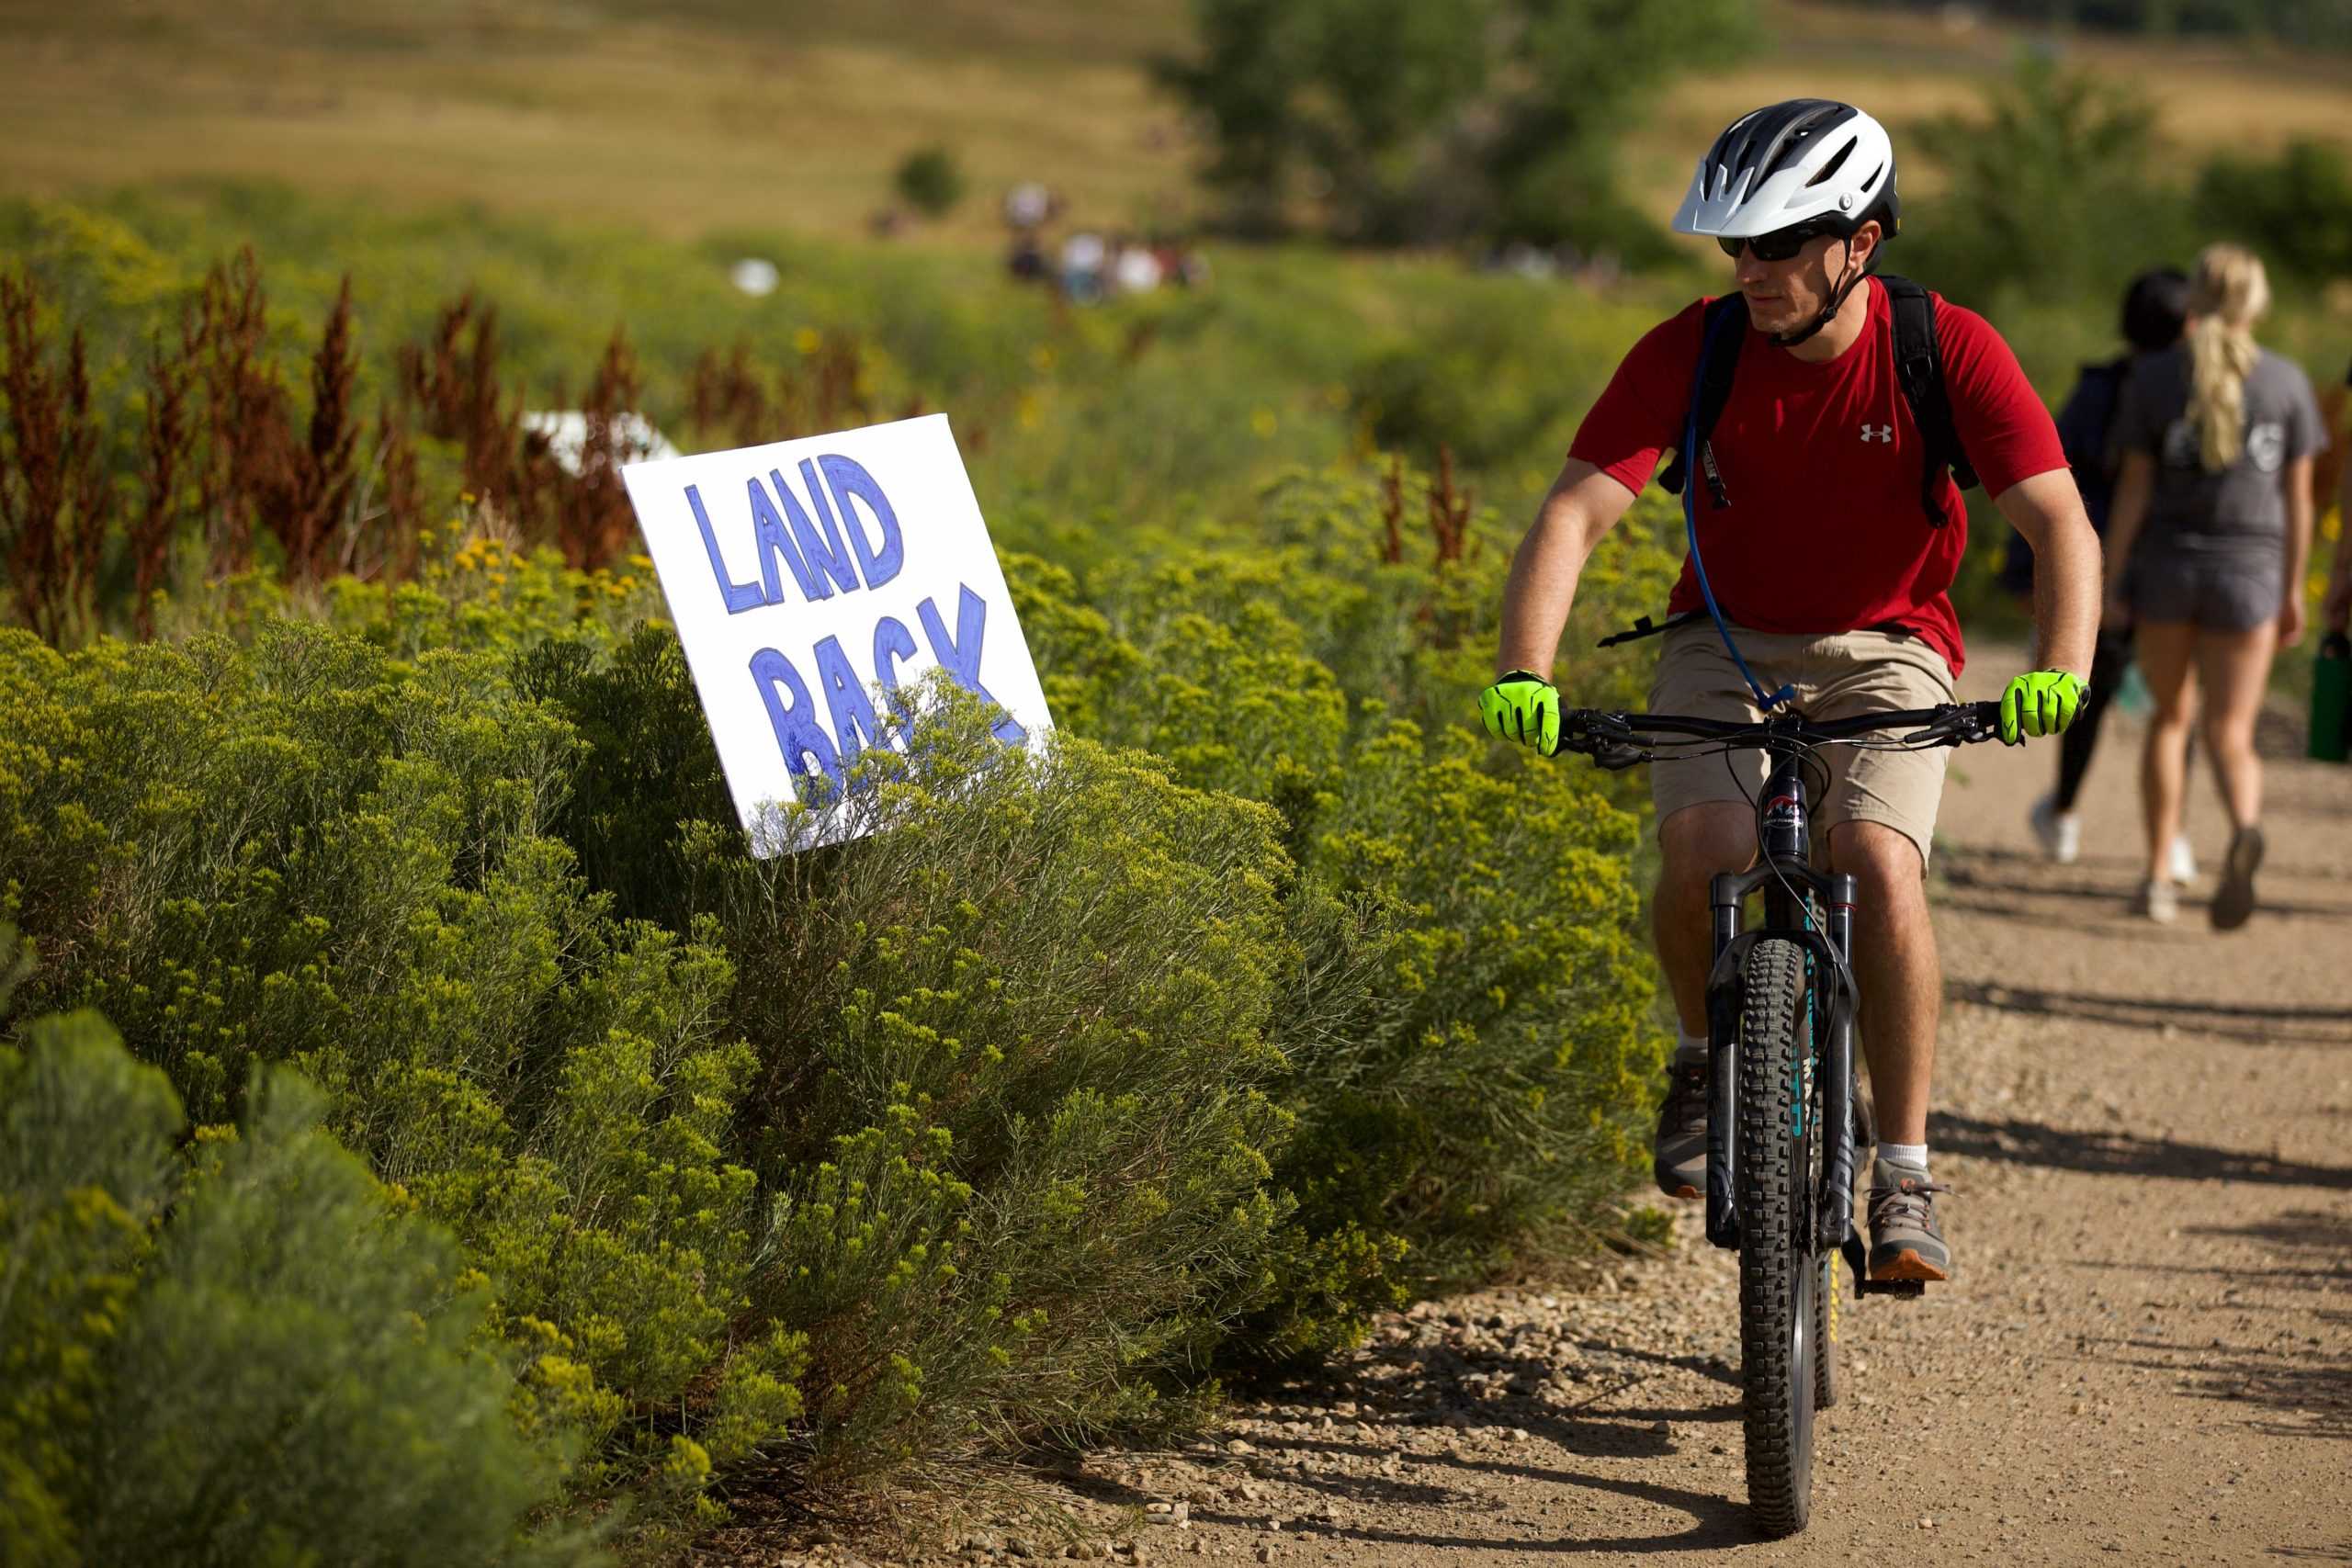 a biker rides past a sign that reads "LAND BACK"